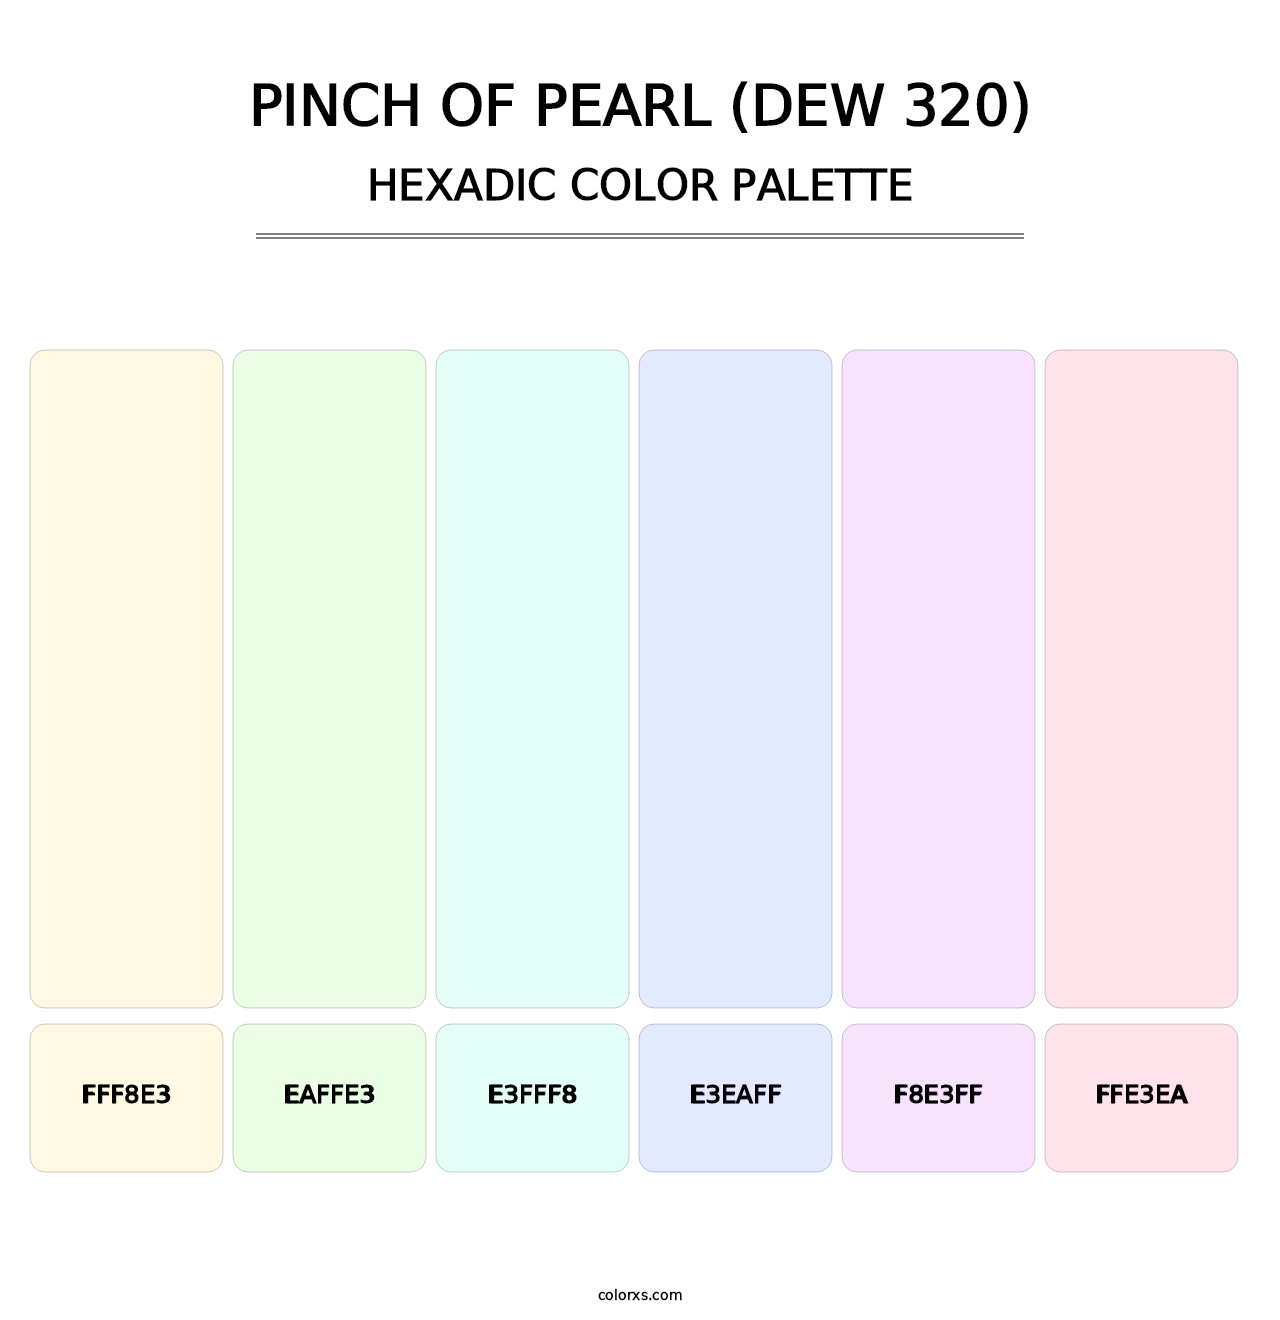 Pinch of Pearl (DEW 320) - Hexadic Color Palette